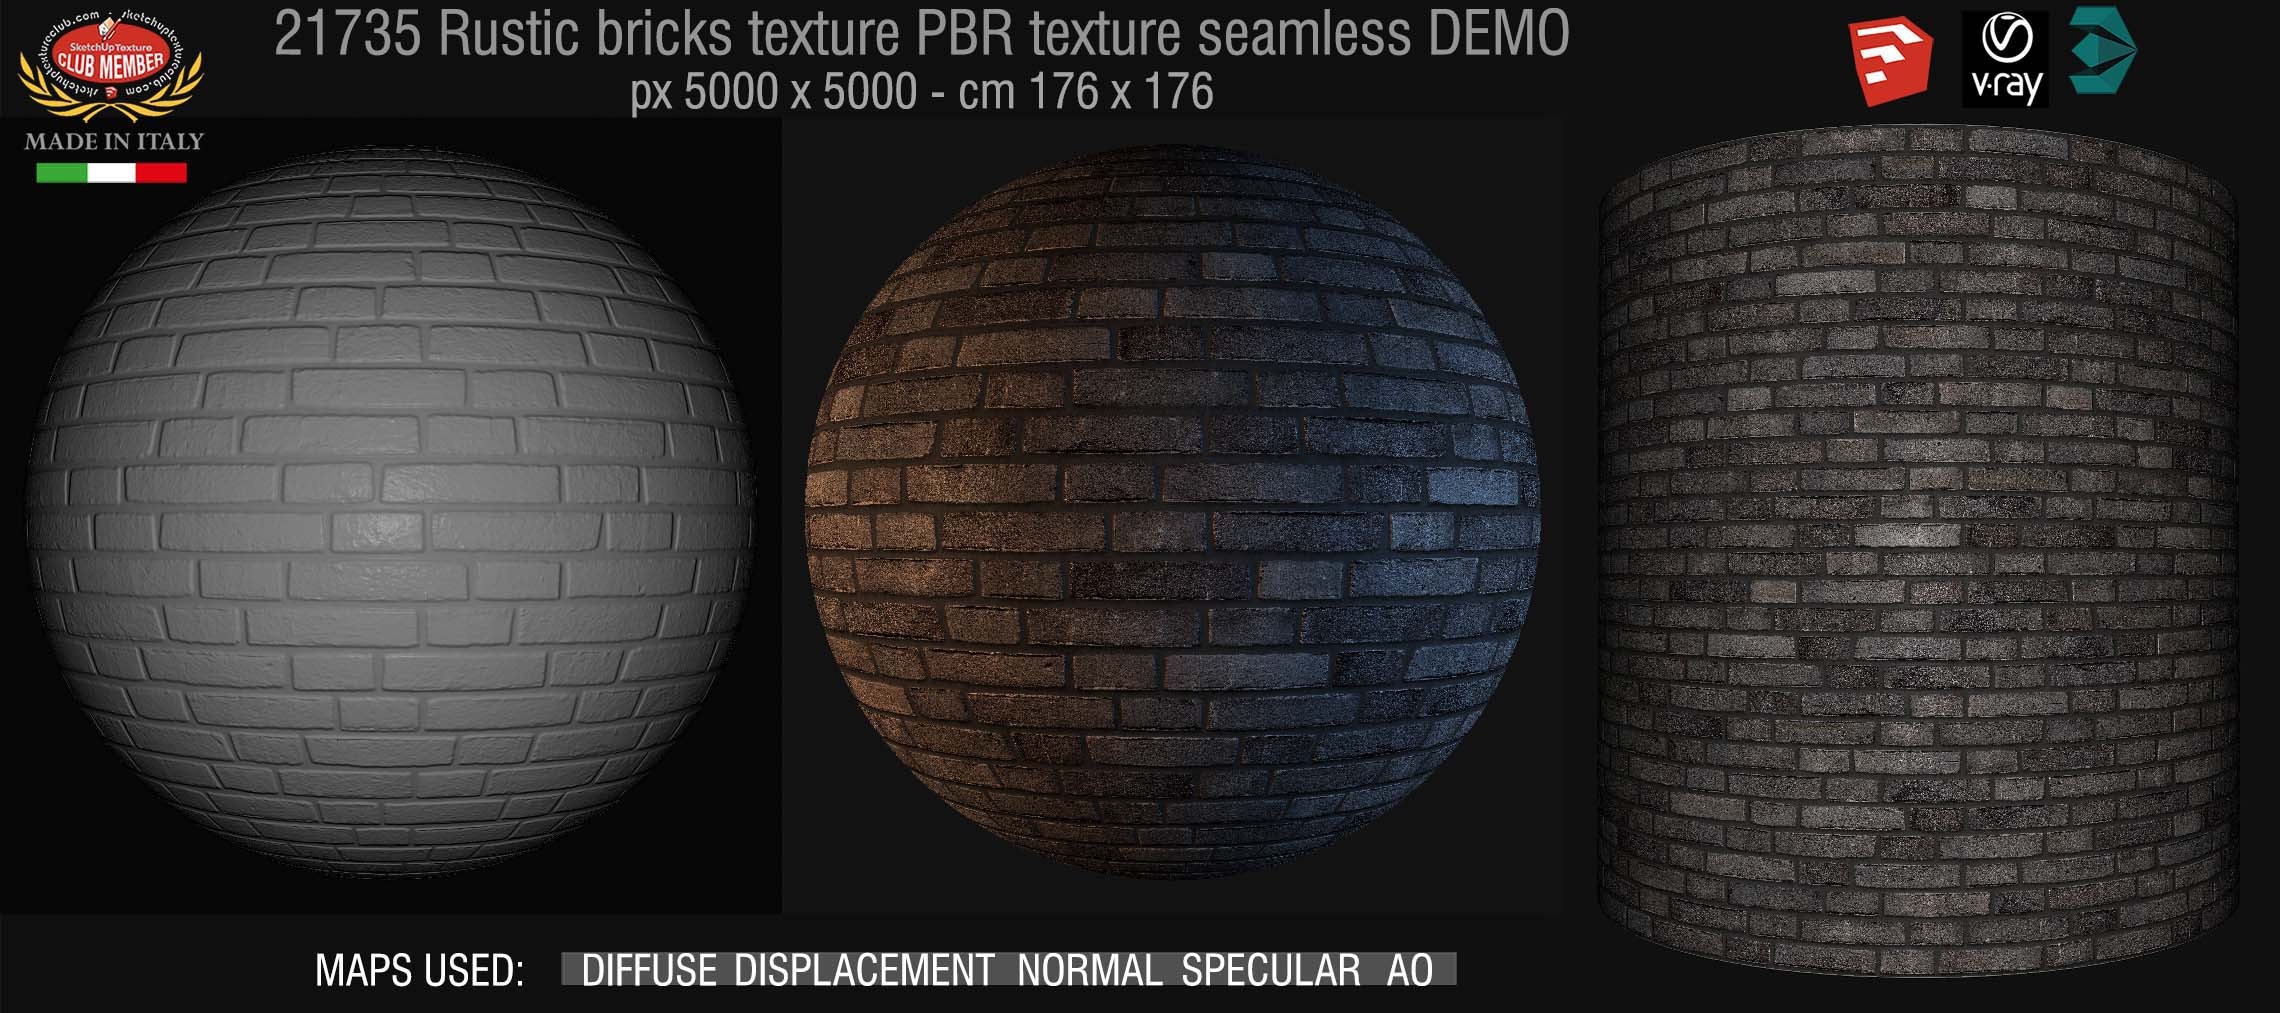 21735 rustic bricks PBR texture seamless DEMO